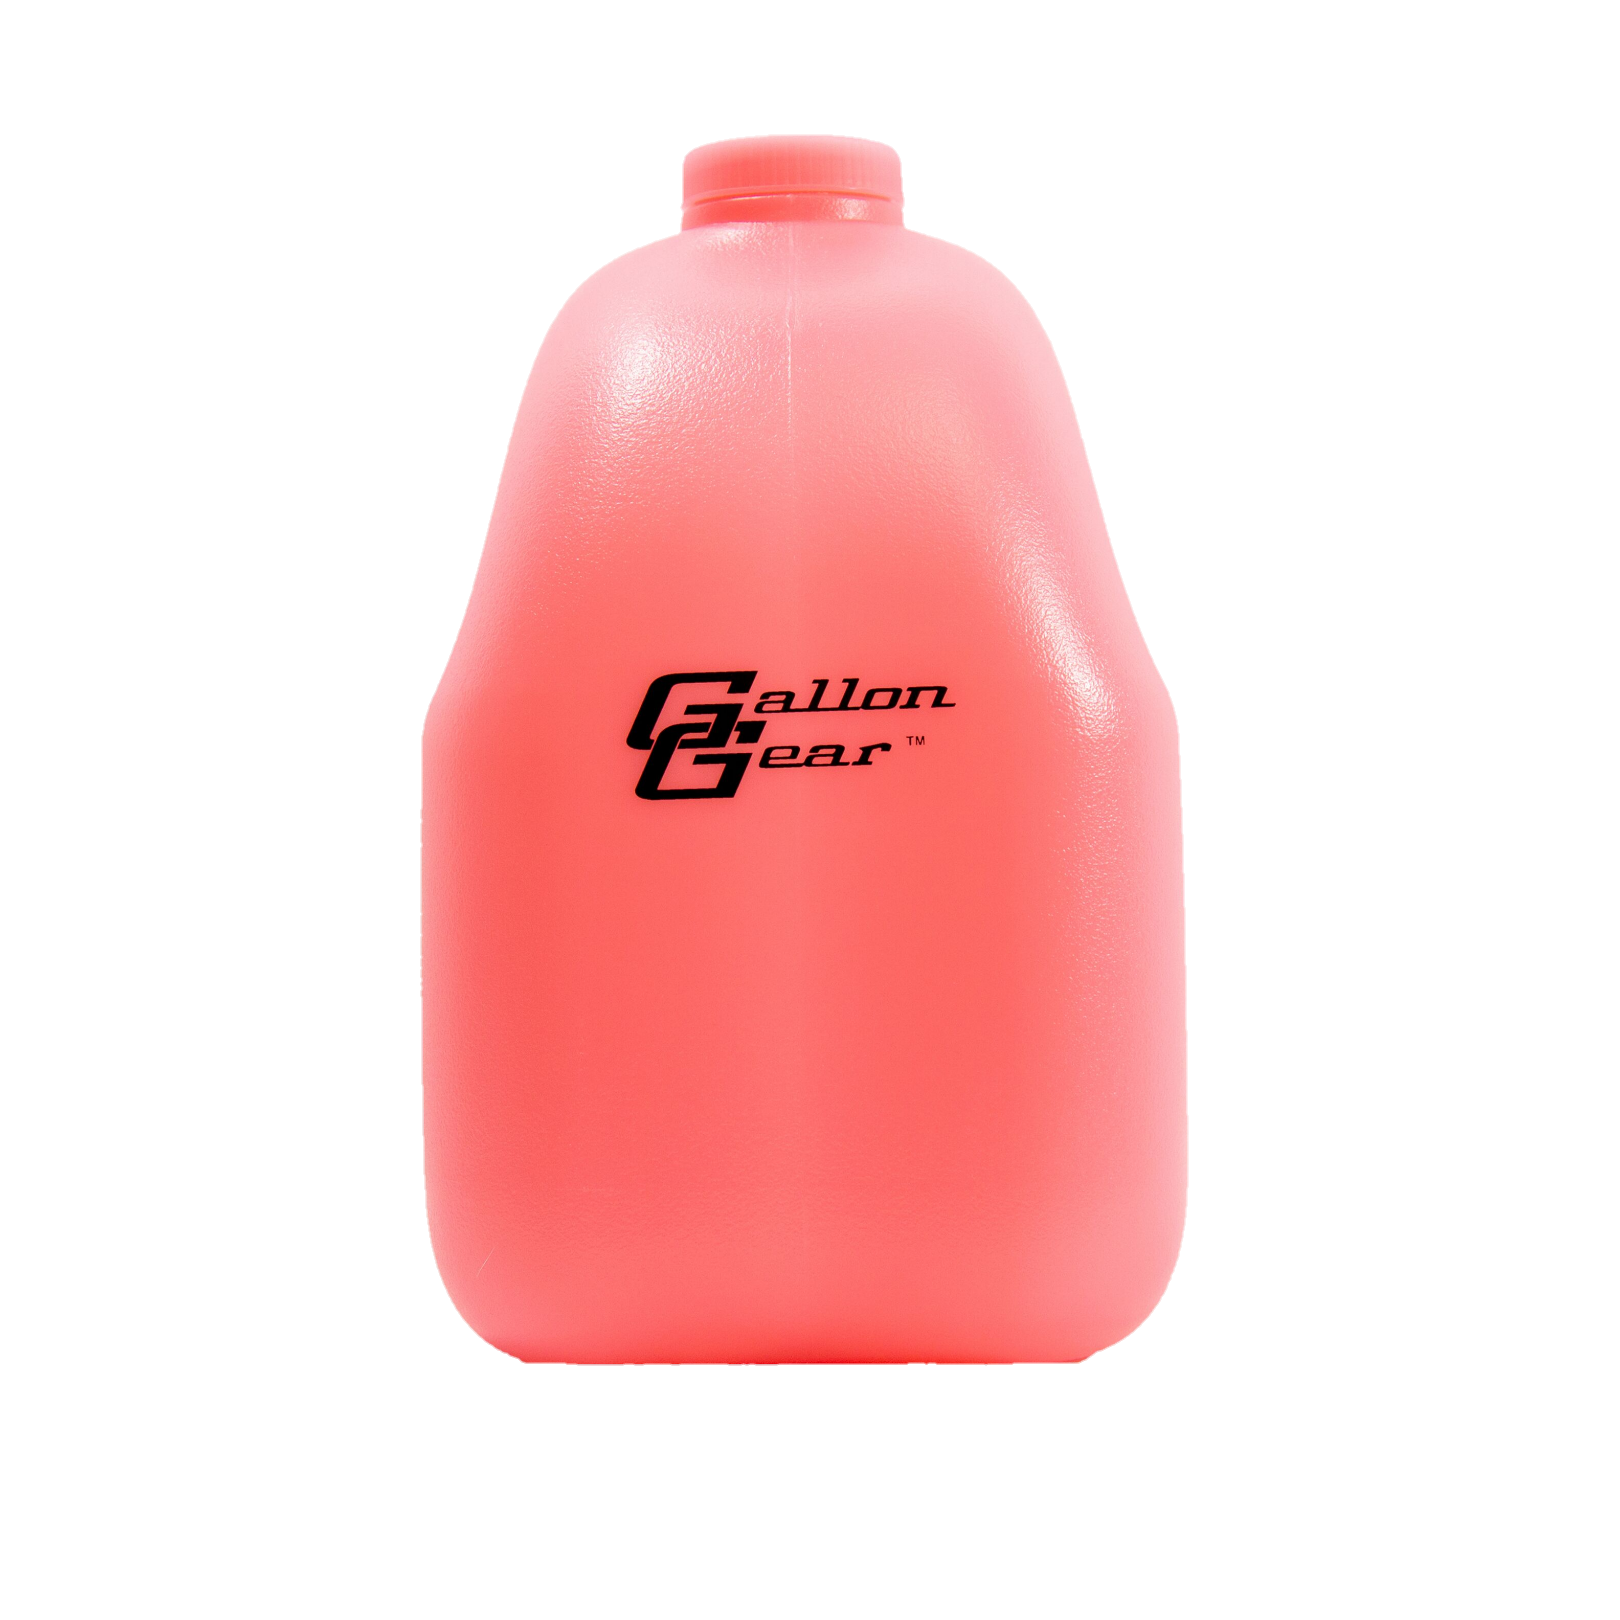 1 Gallon Jug Mint Sleeve Pink Transparent Gallon Bottle Combo